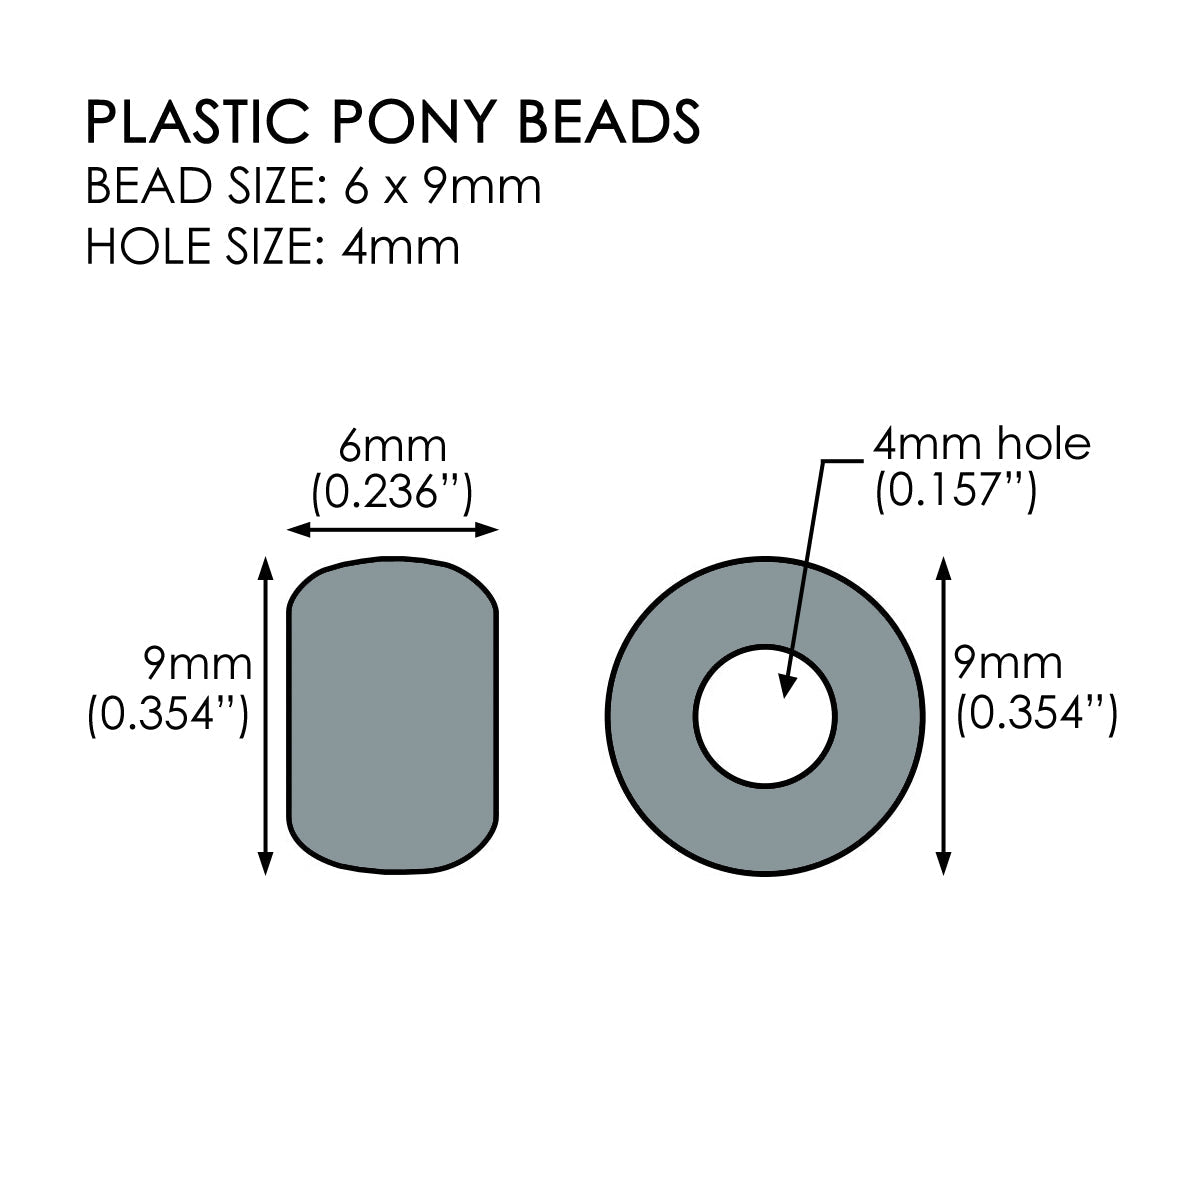 Hot Pink Transparent Plastic Pony Beads 6 x 9mm